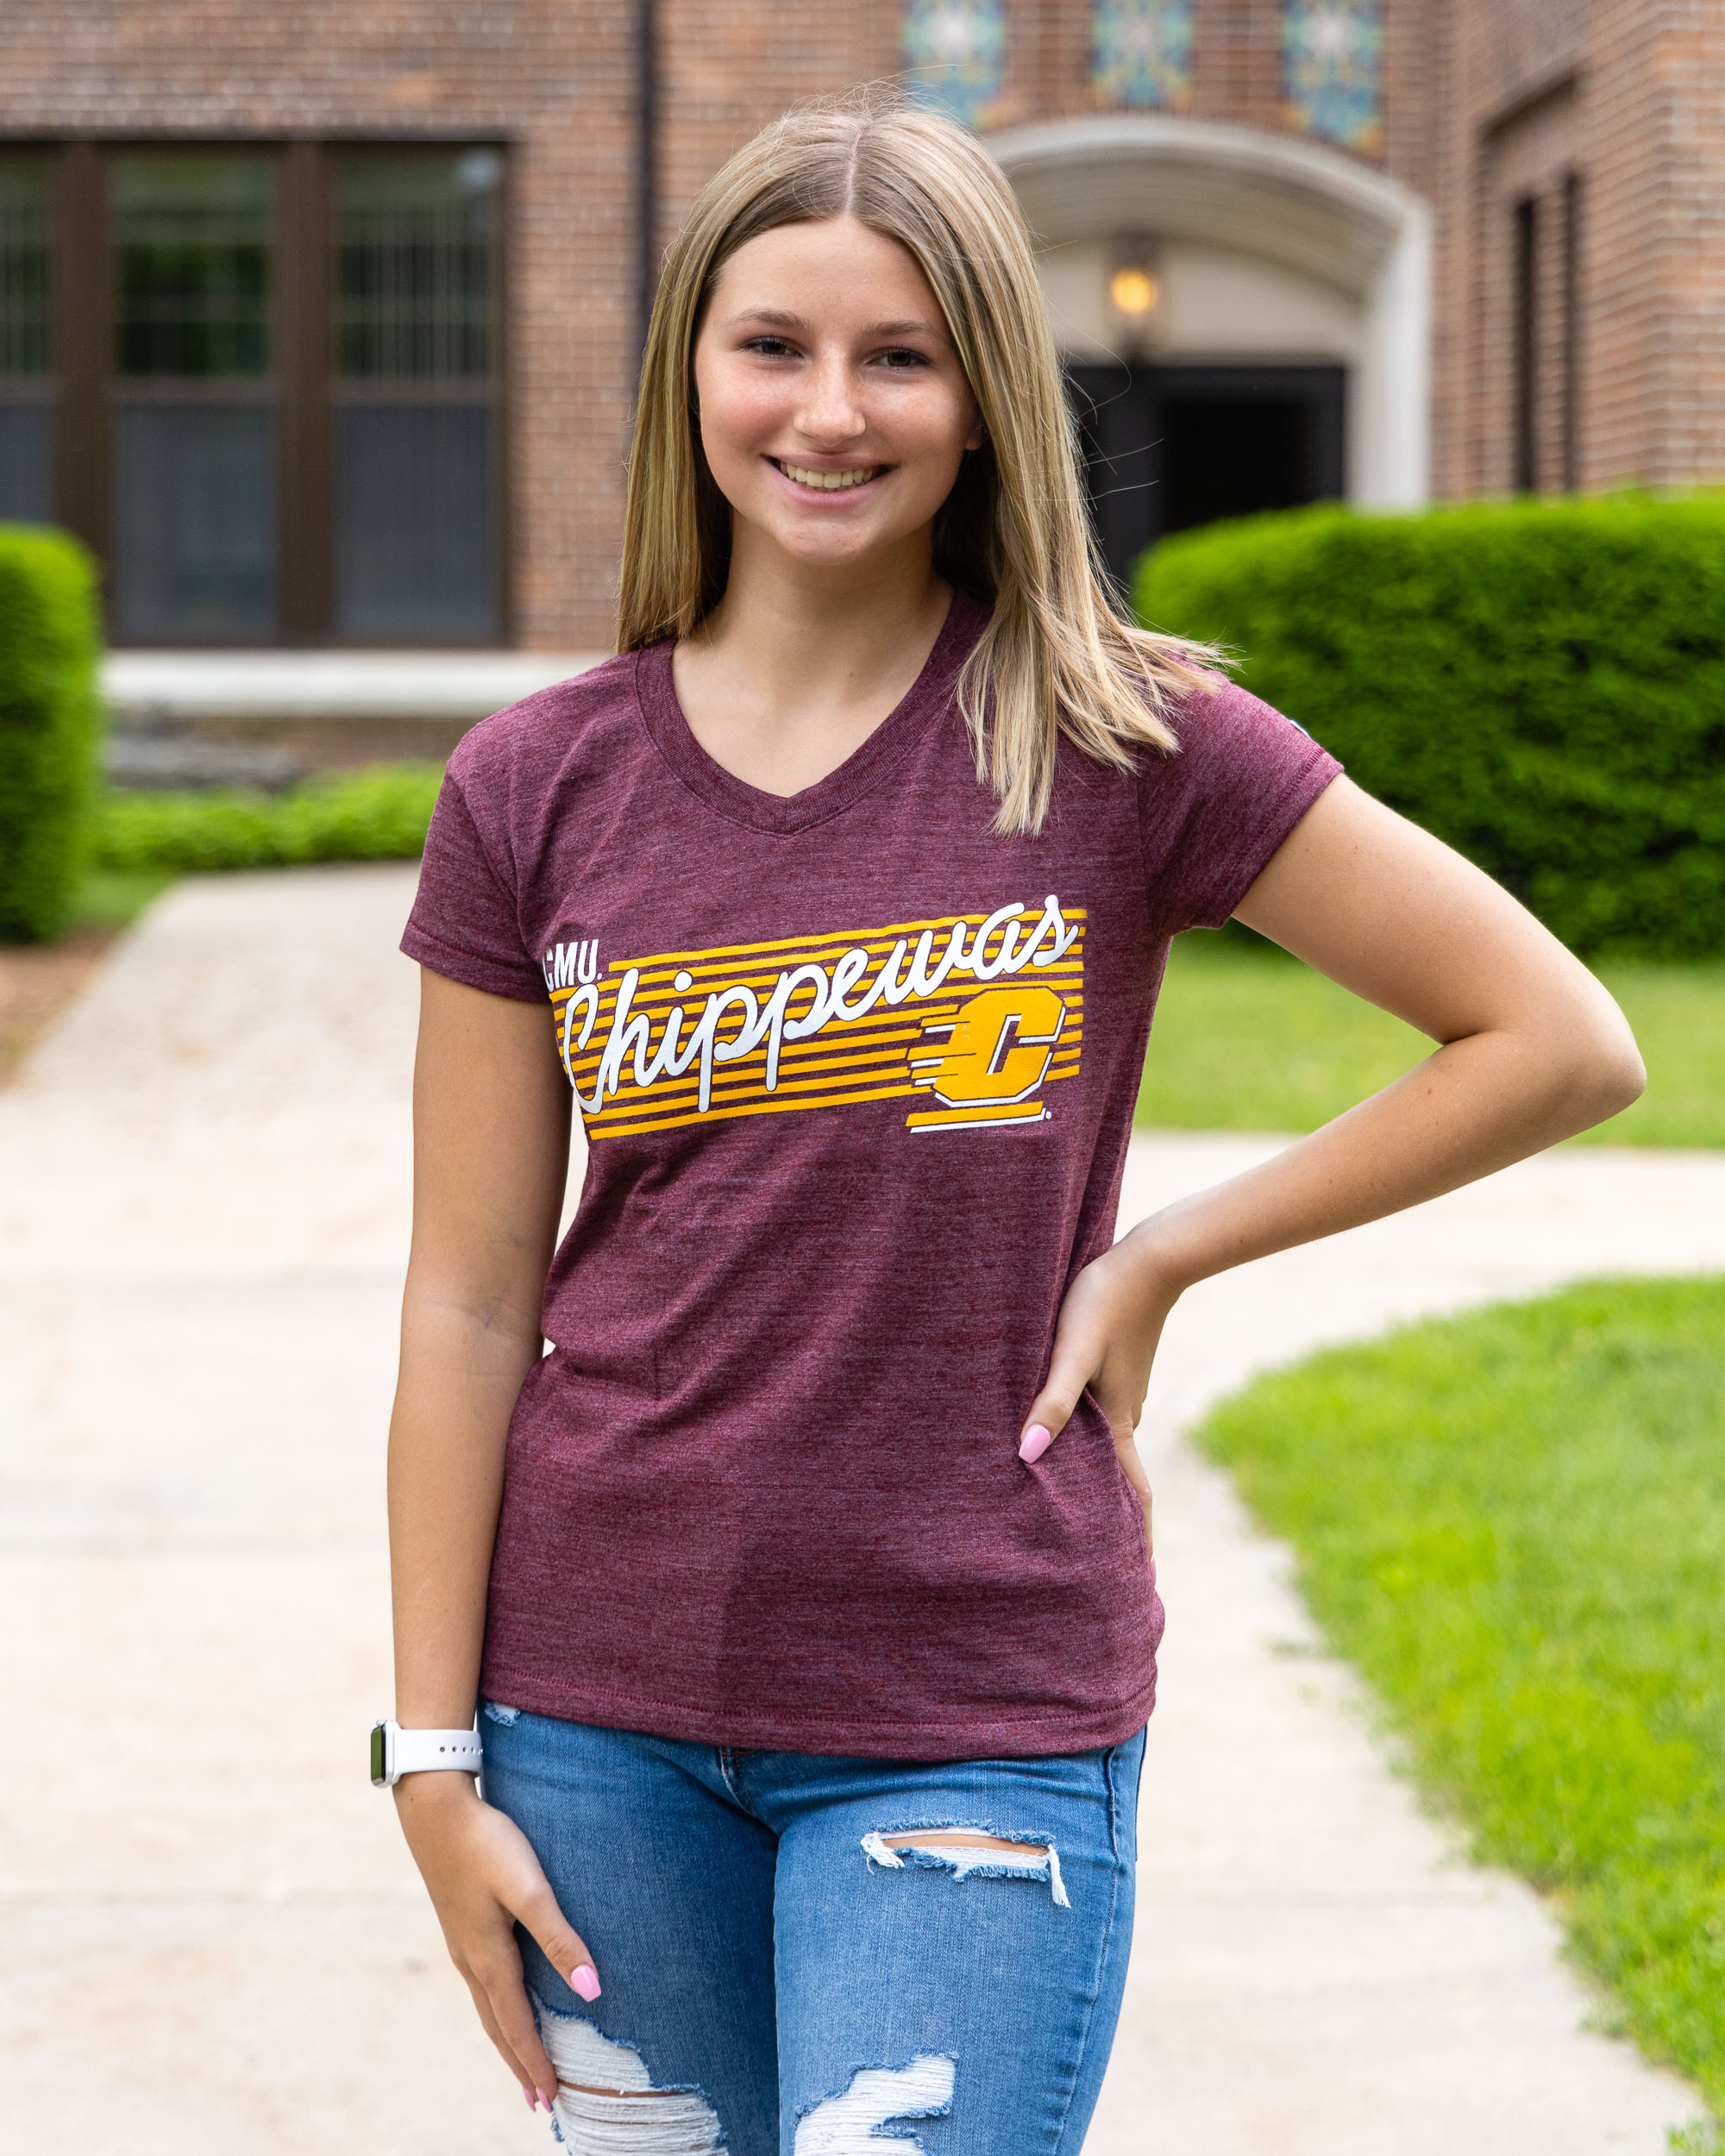 CMU Chippewas Action C Heather Maroon Tri-Blend T-Shirt (SKU 5054559998)